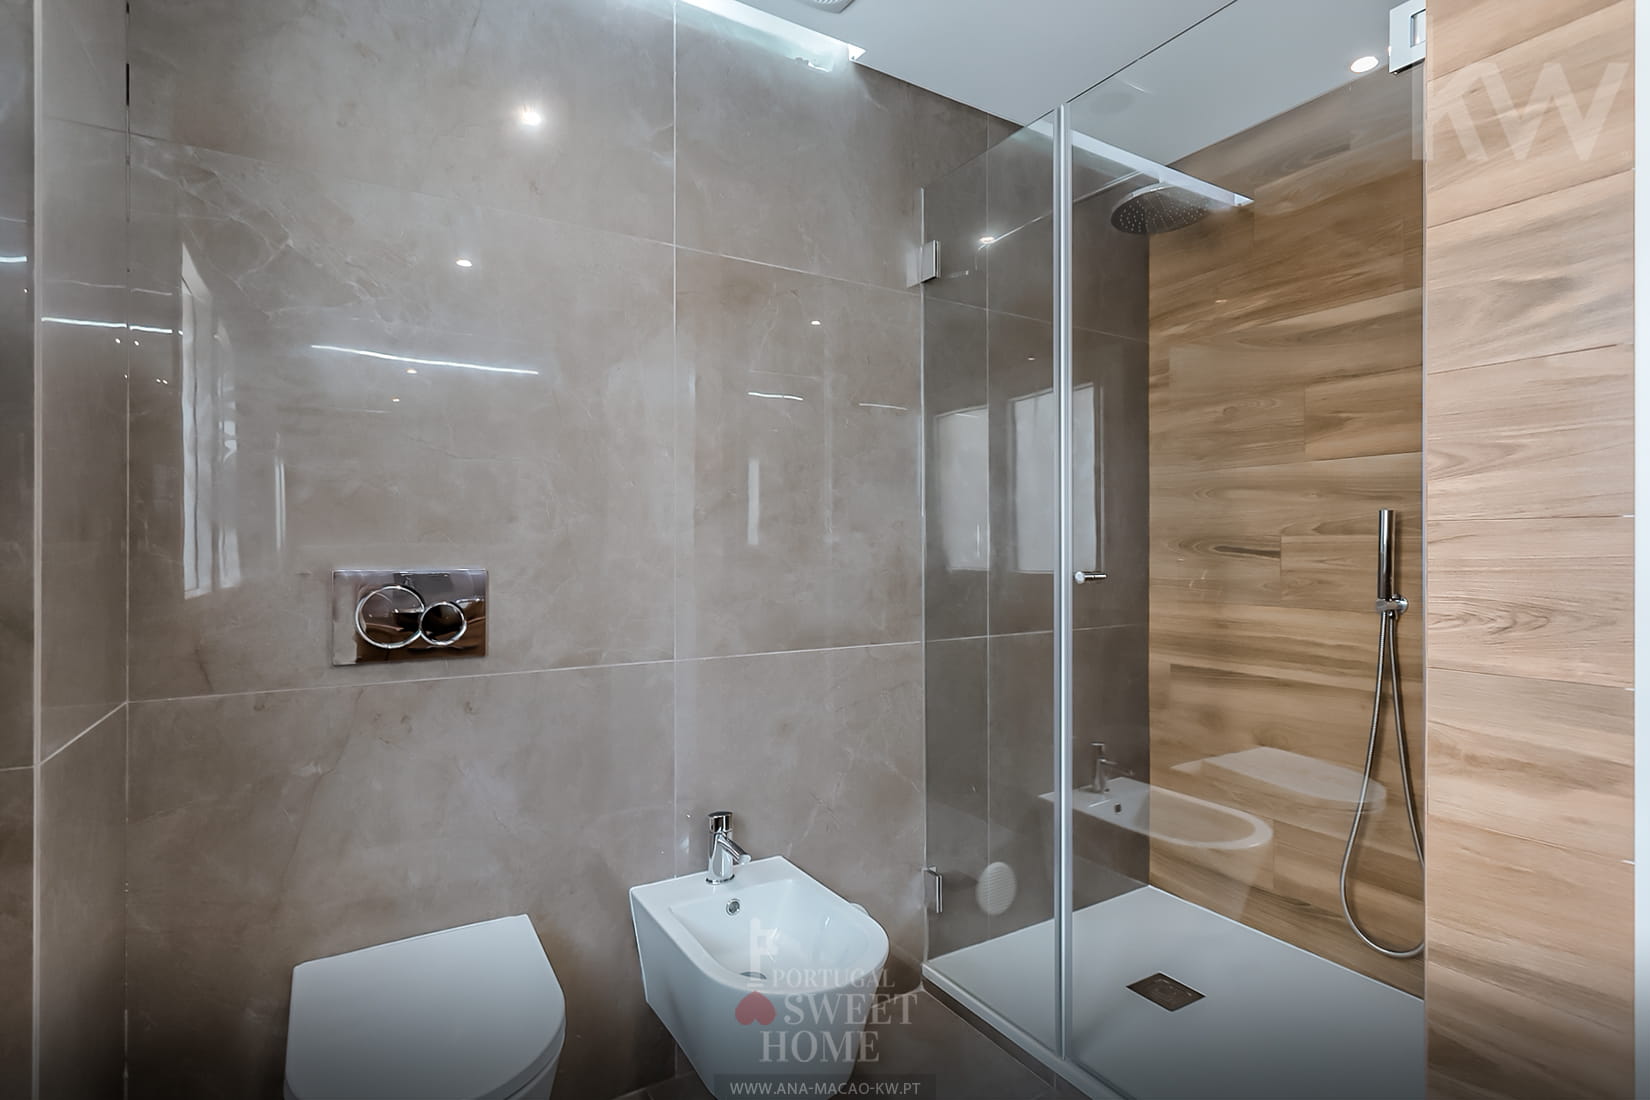 Master suite bathroom with 6.2 m2